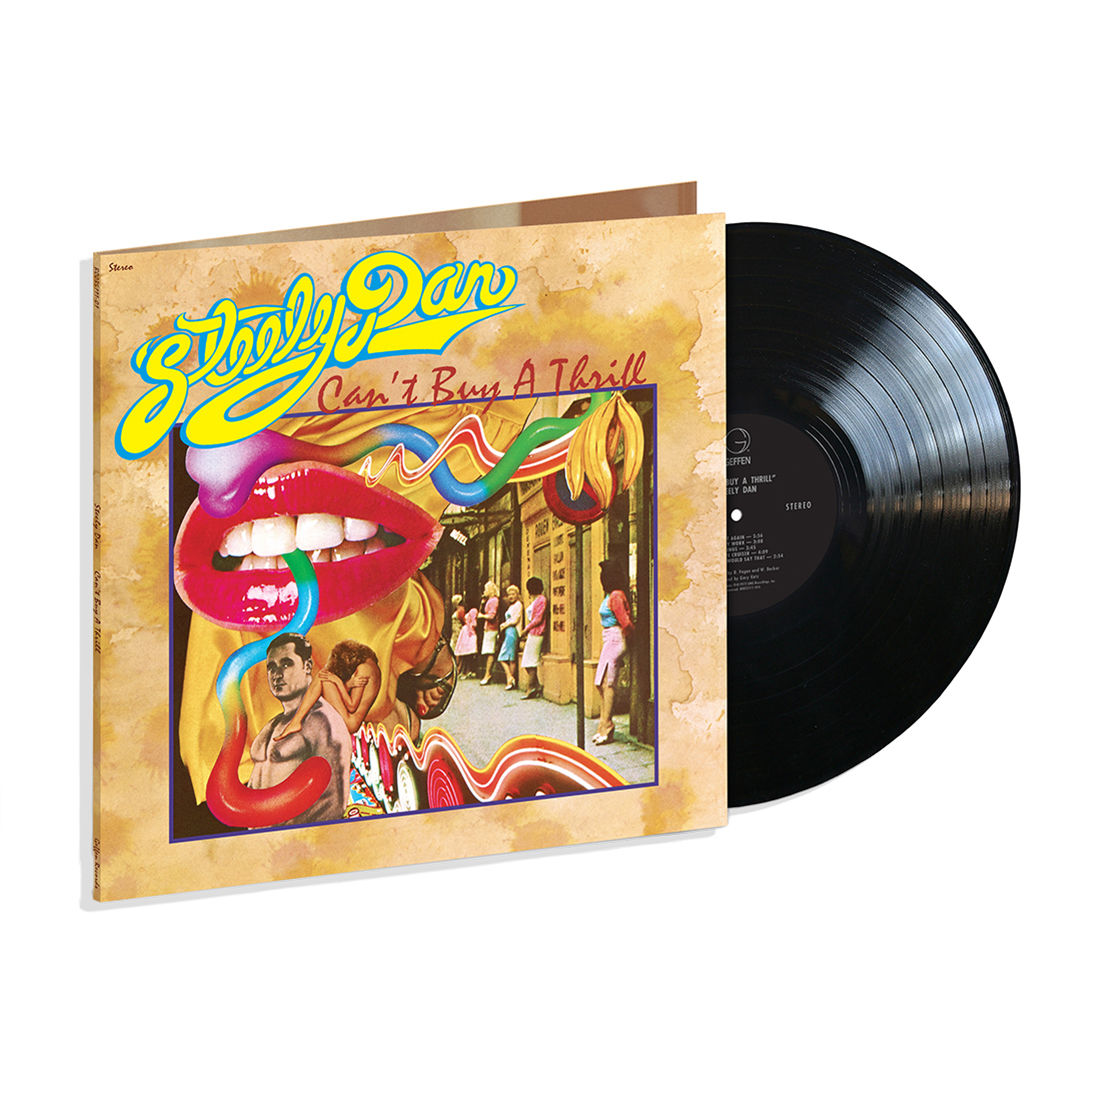 Steely Dan - Can't Buy A Thrill: Vinyl LP